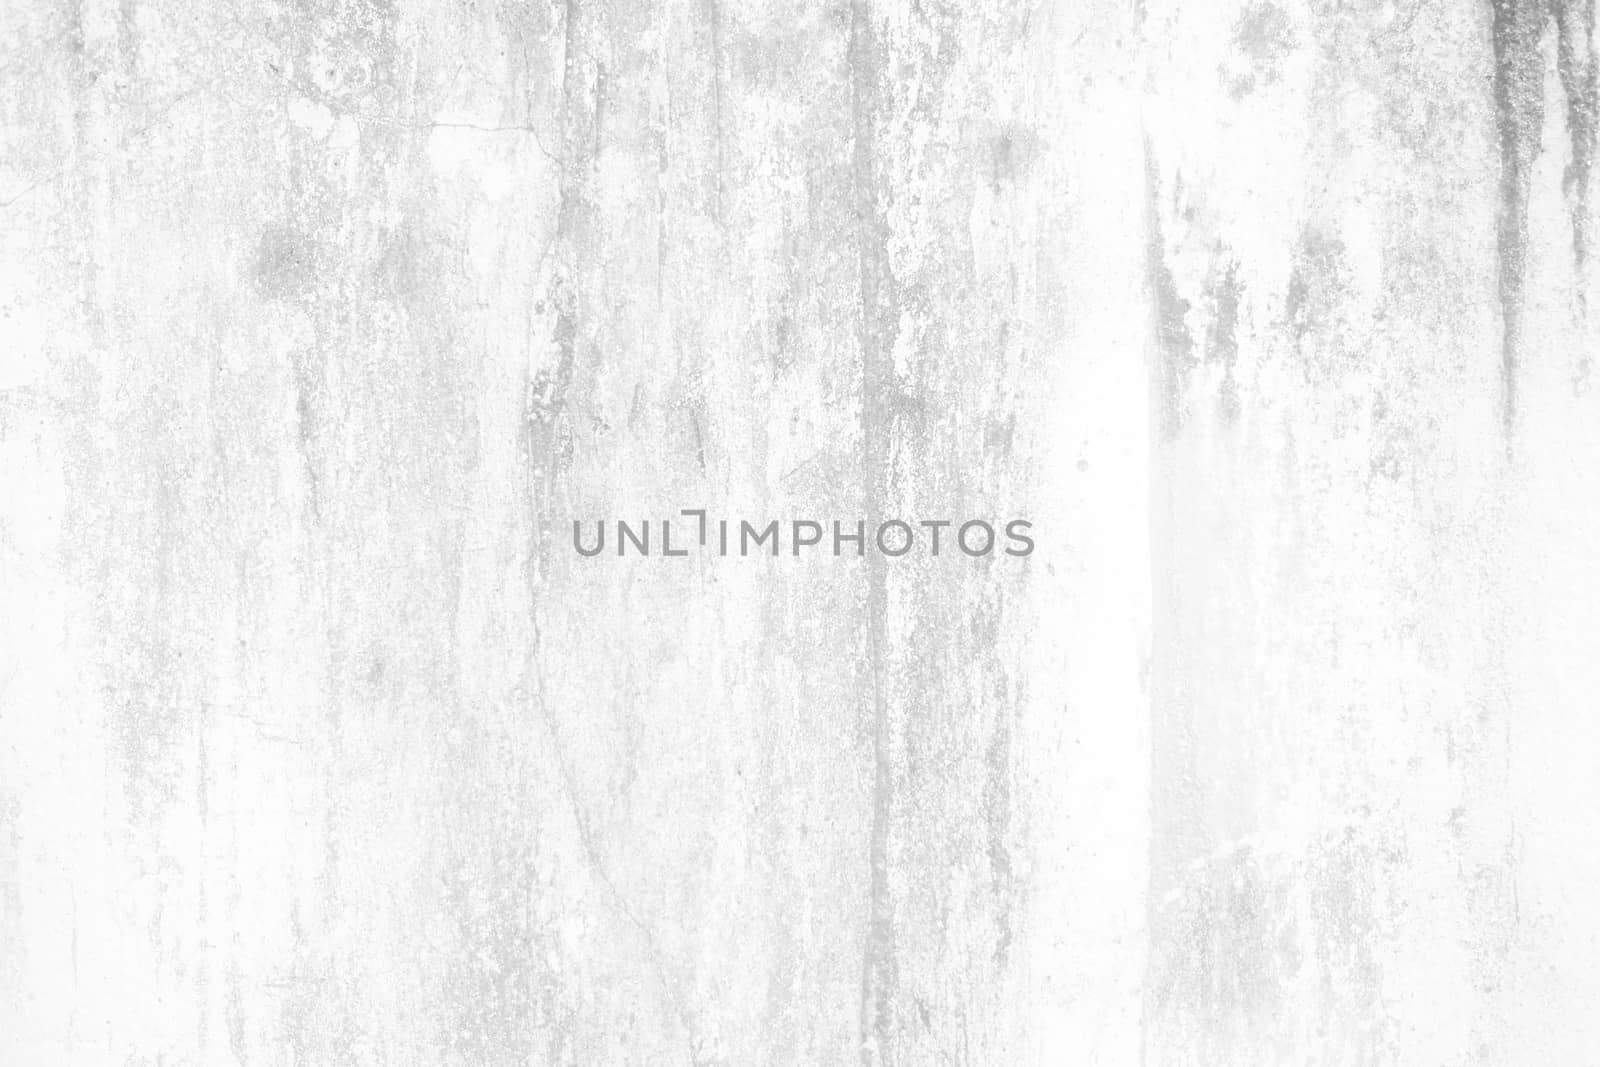 White Grunge Concrete Wall Texture Background.